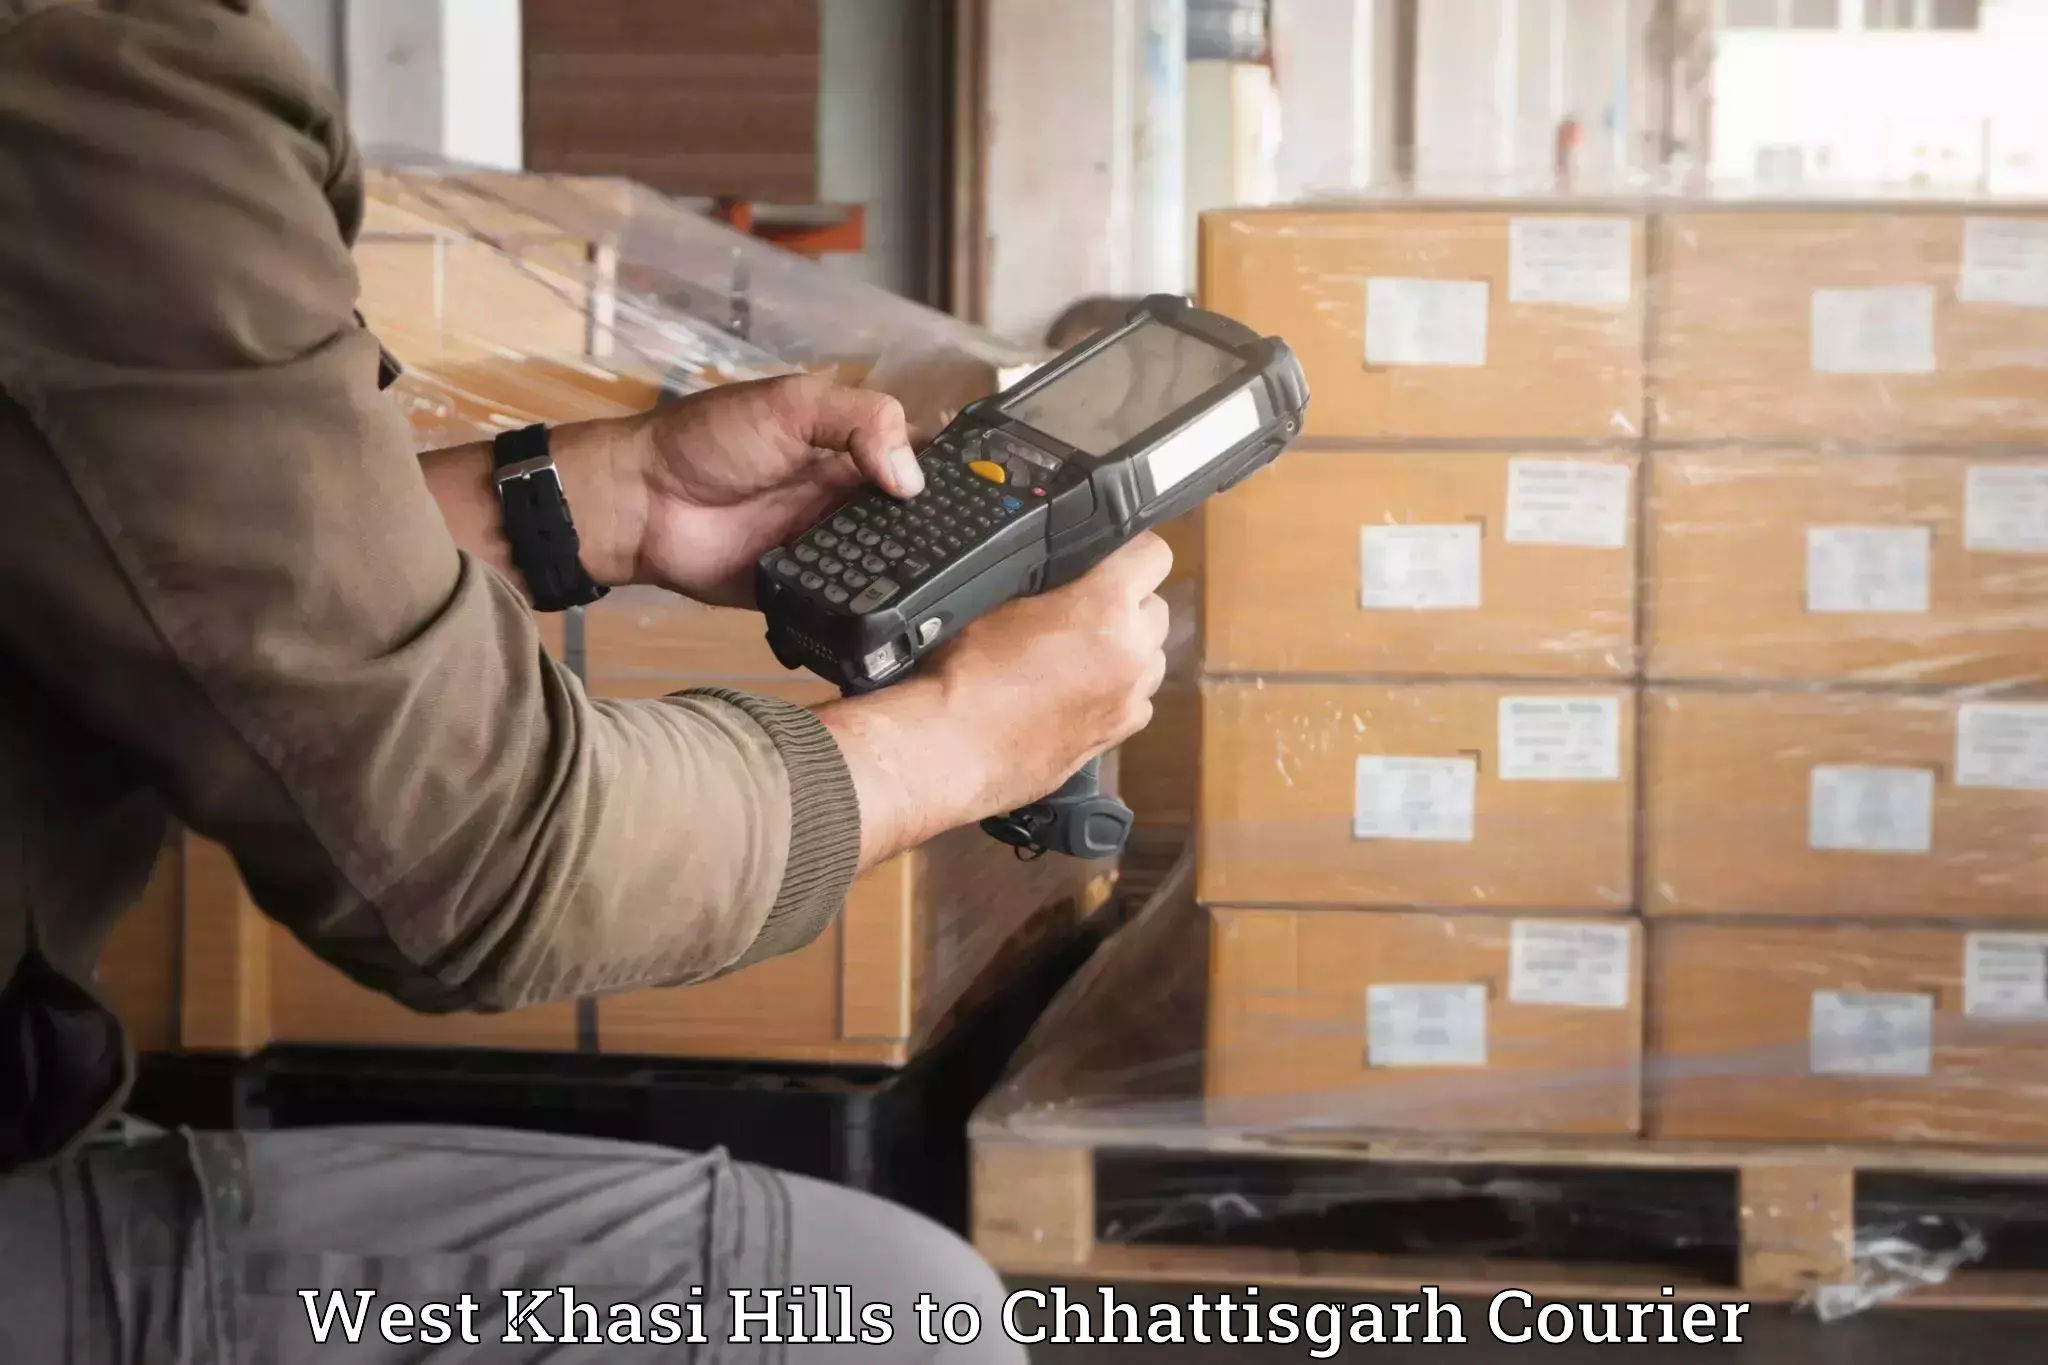 Professional moving company West Khasi Hills to Pendra